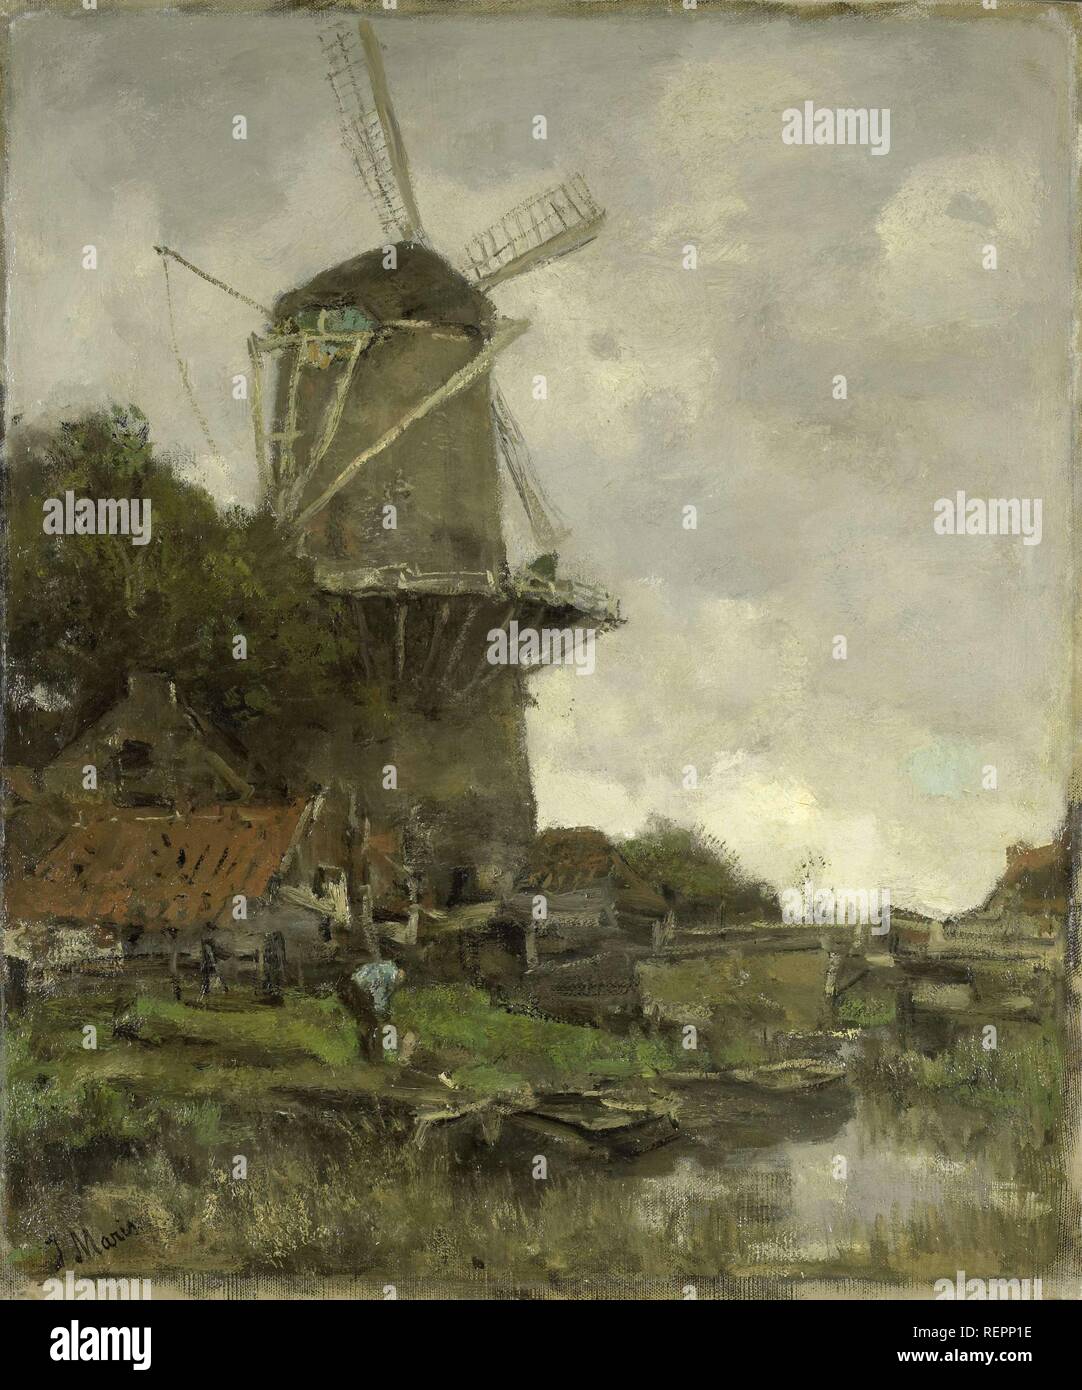 The Windmill. Dating: c. 1880 - c. 1886. Measurements: h 59.5 cm × w 50 cm × t 3.3 cm; d 12 cm. Museum: Rijksmuseum, Amsterdam. Author: JACOB MARIS. Stock Photo